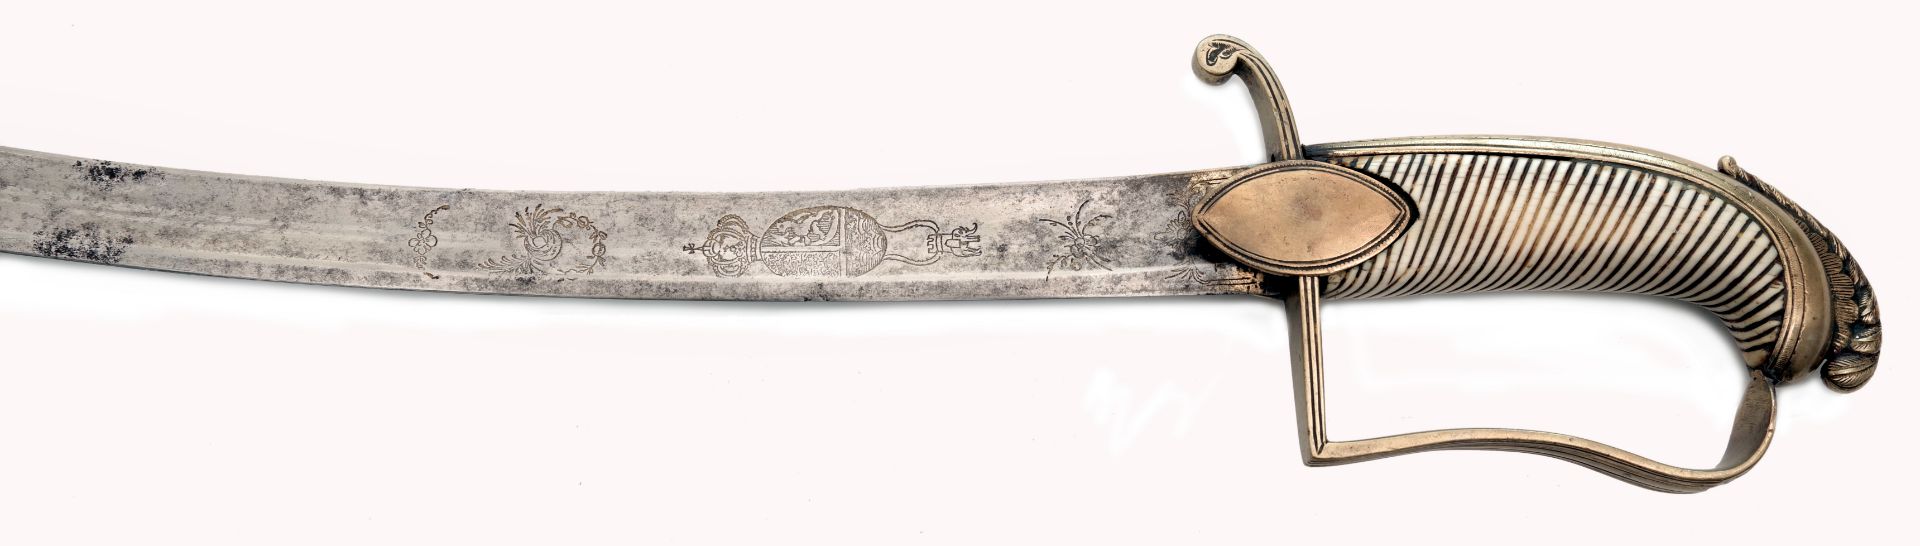 Danish-Norwegian sabre of a senior office from the Napoleonic era